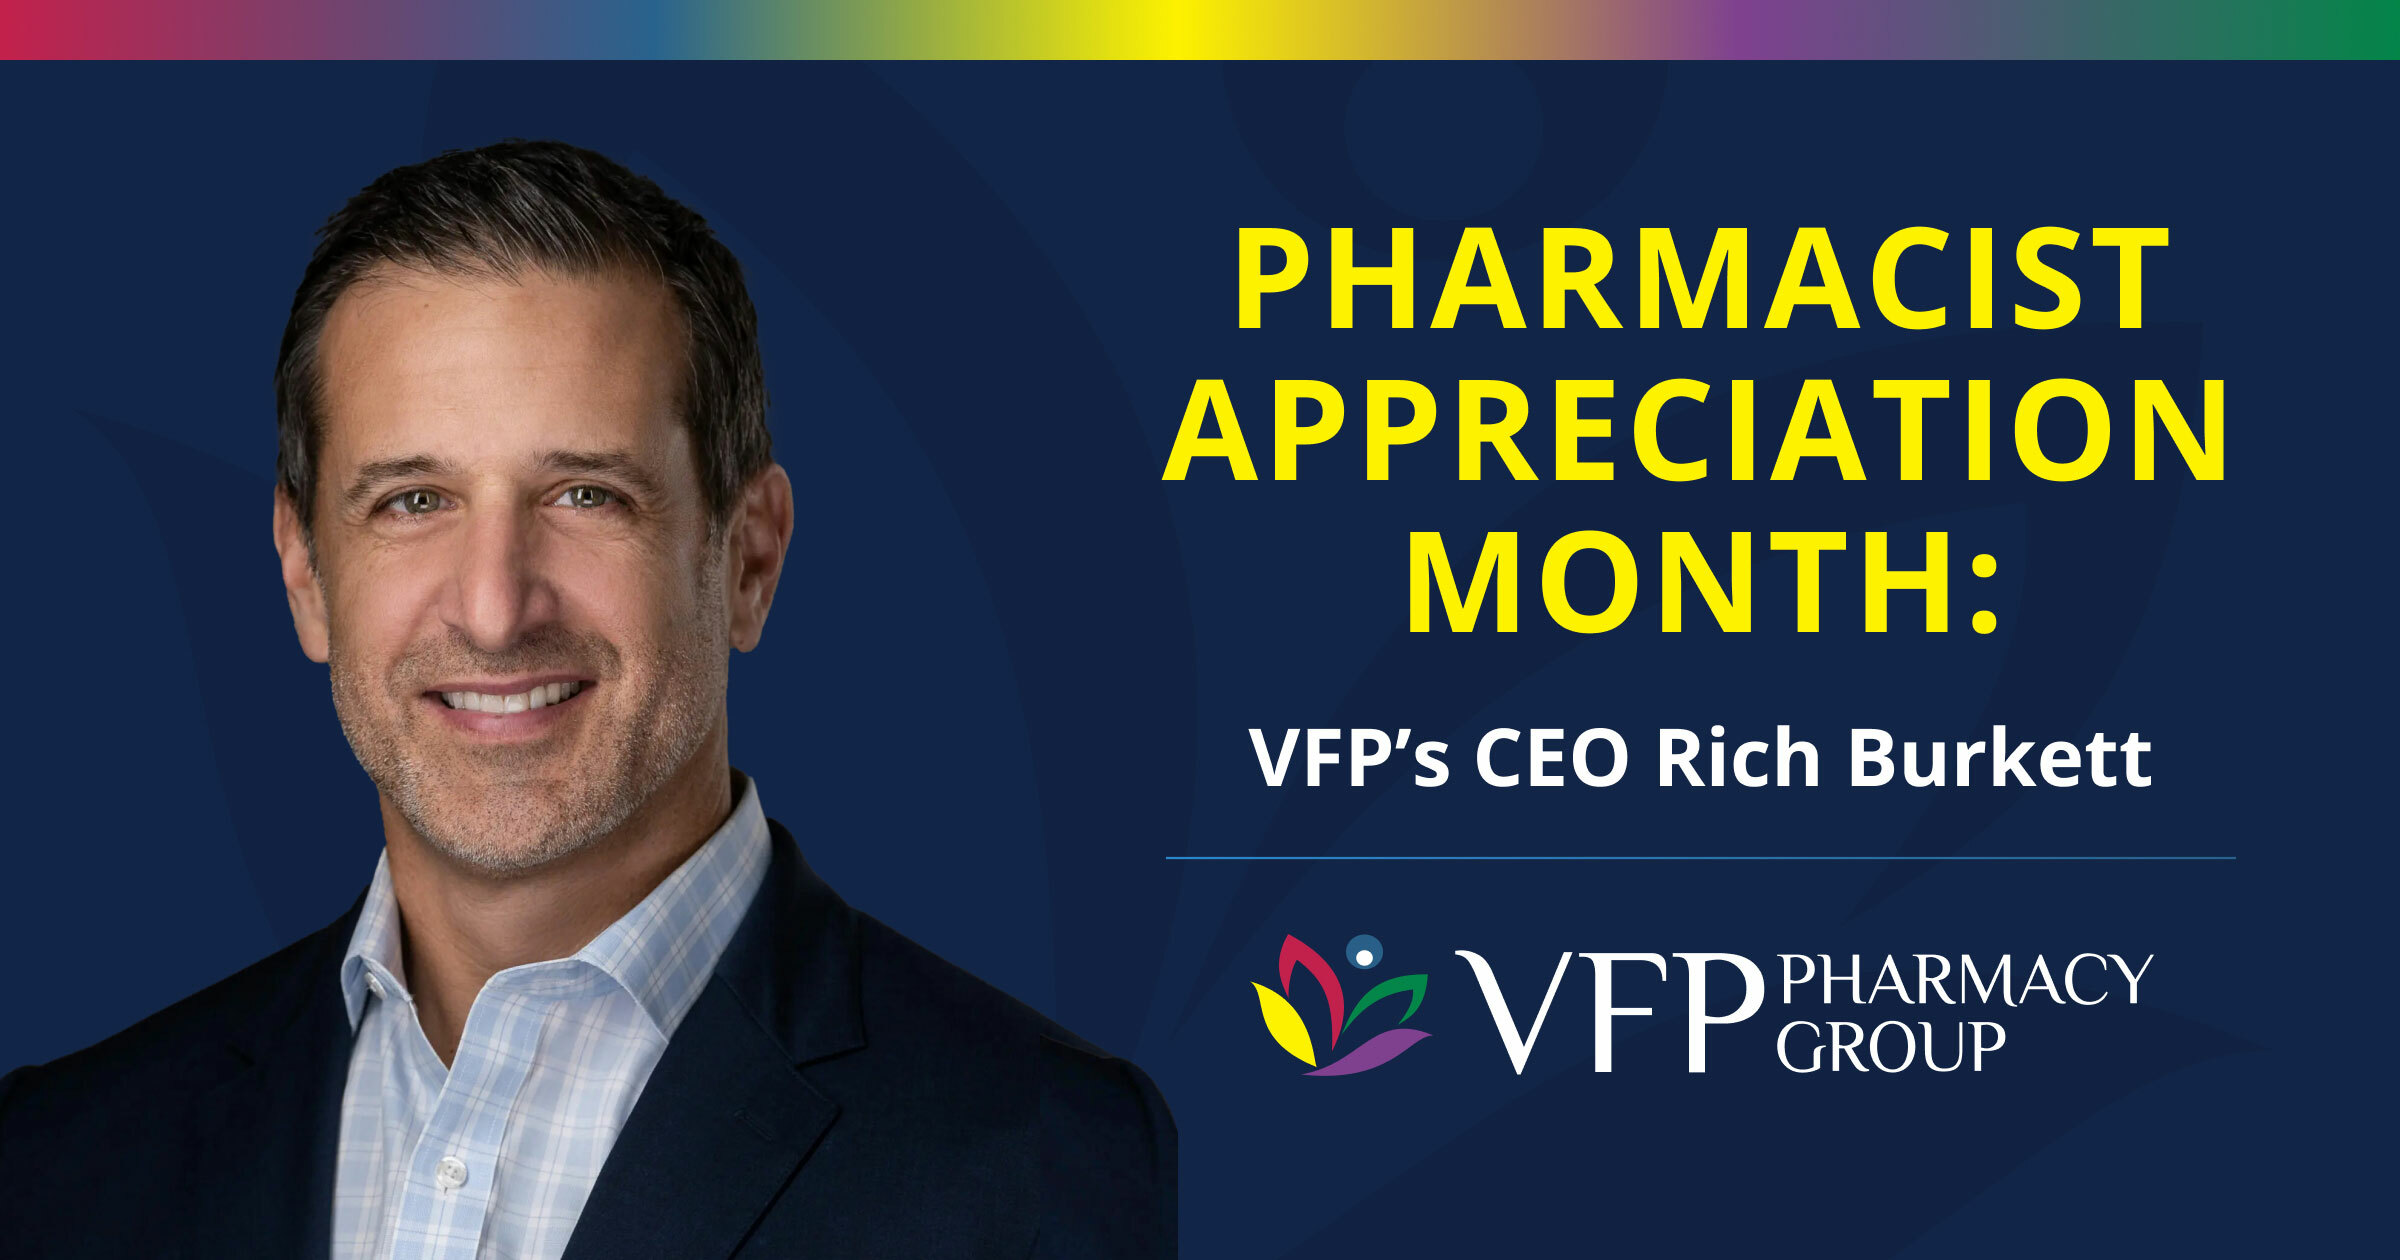 VFP Pharmacy Group's CEO Rich Burkett